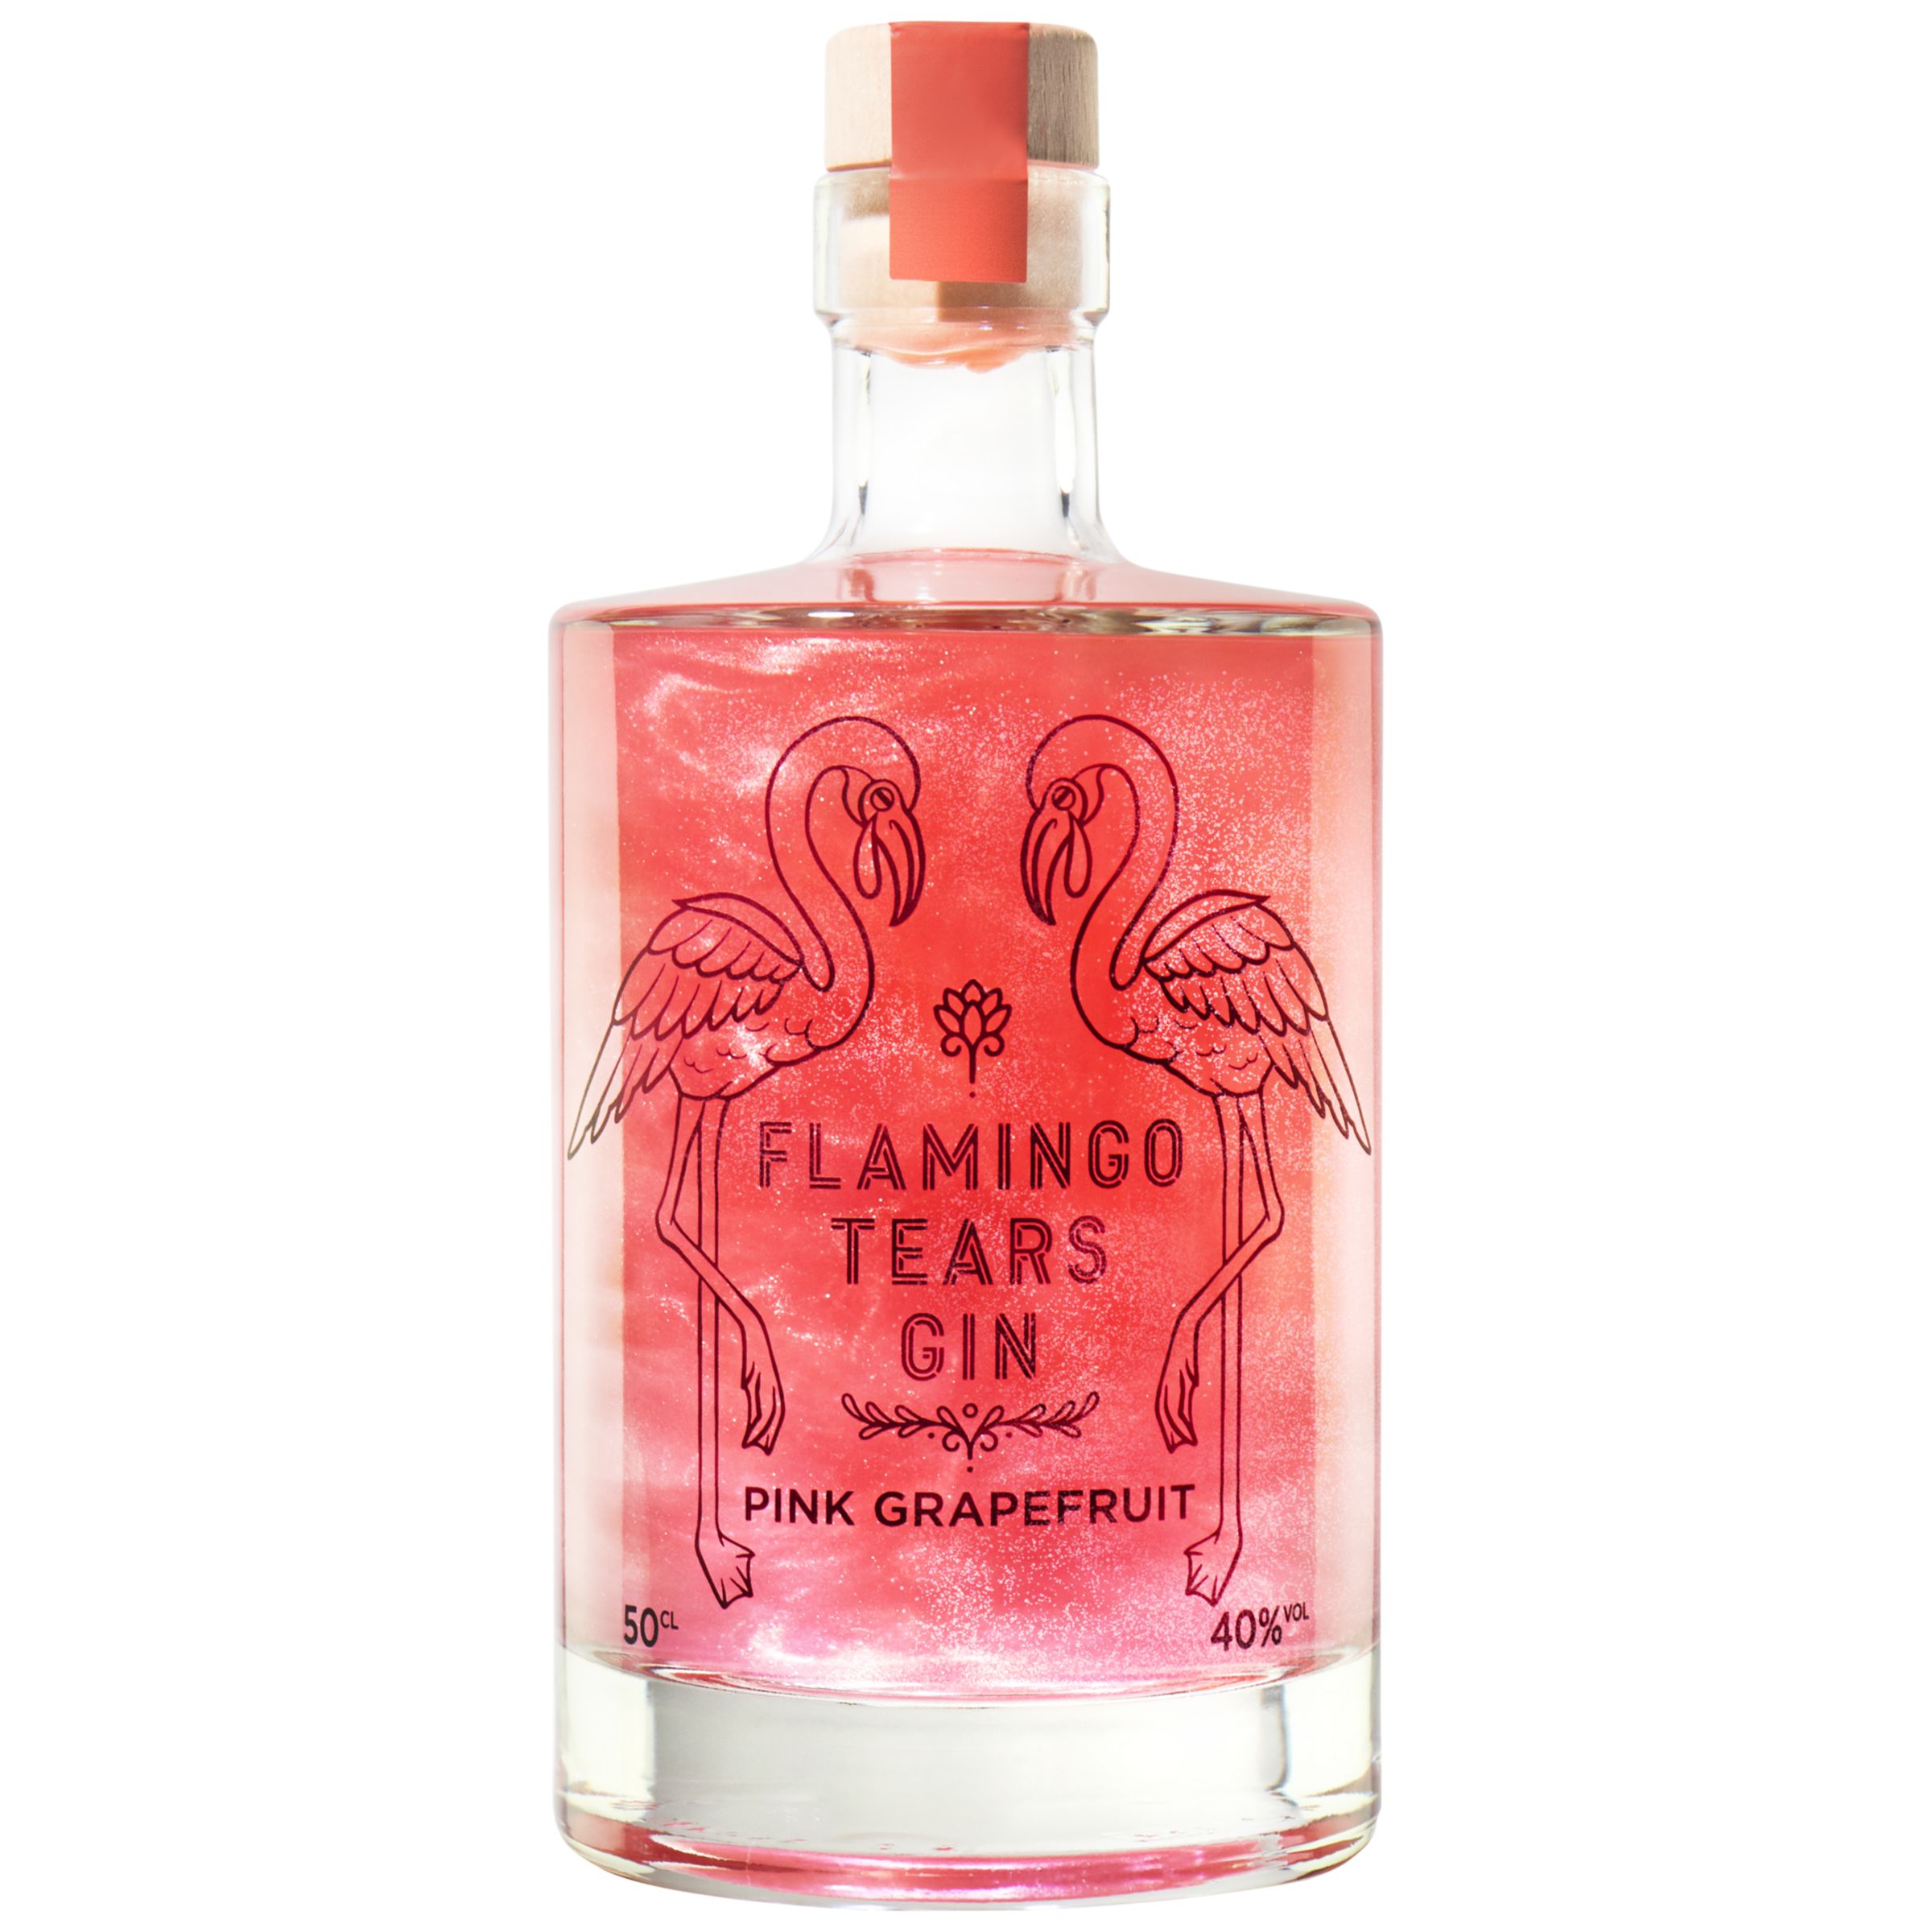 Firebox Flamingo Tears Pink Grapefruit Gin, 50cl